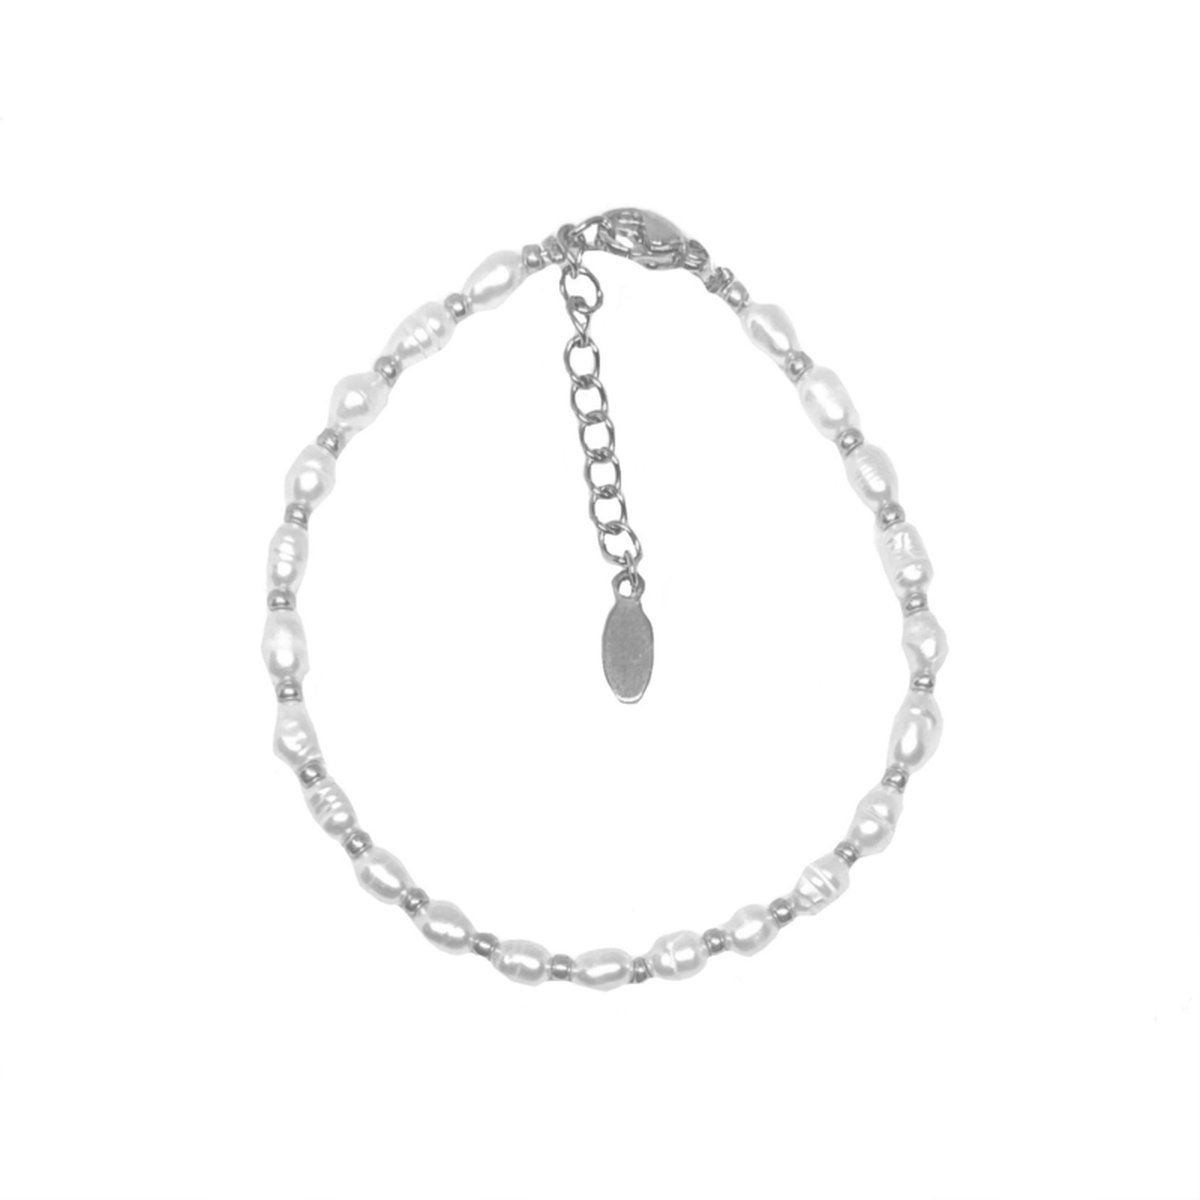 Pearls & beads bracelet - silver